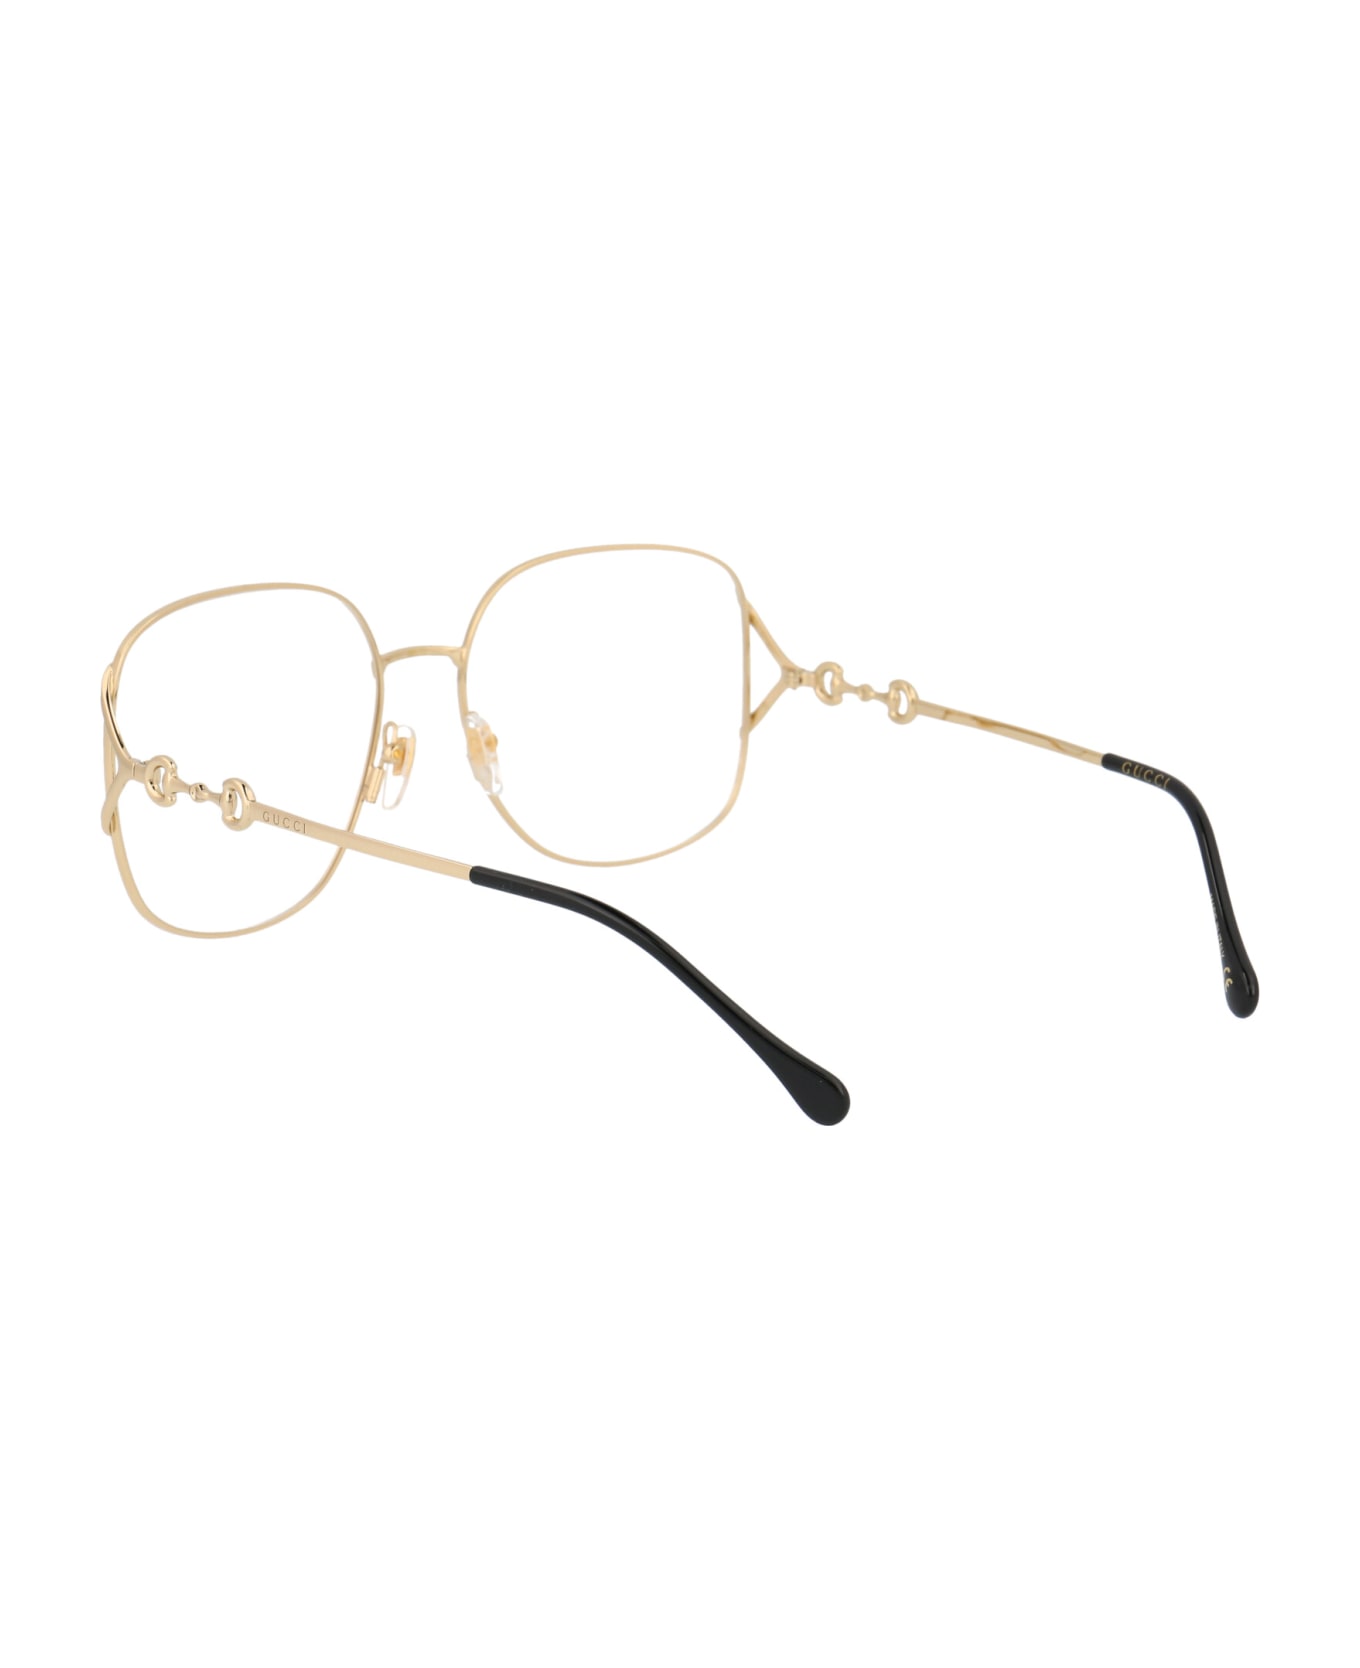 Gucci Eyewear Gg1019o Glasses - 001 GOLD GOLD TRANSPARENT